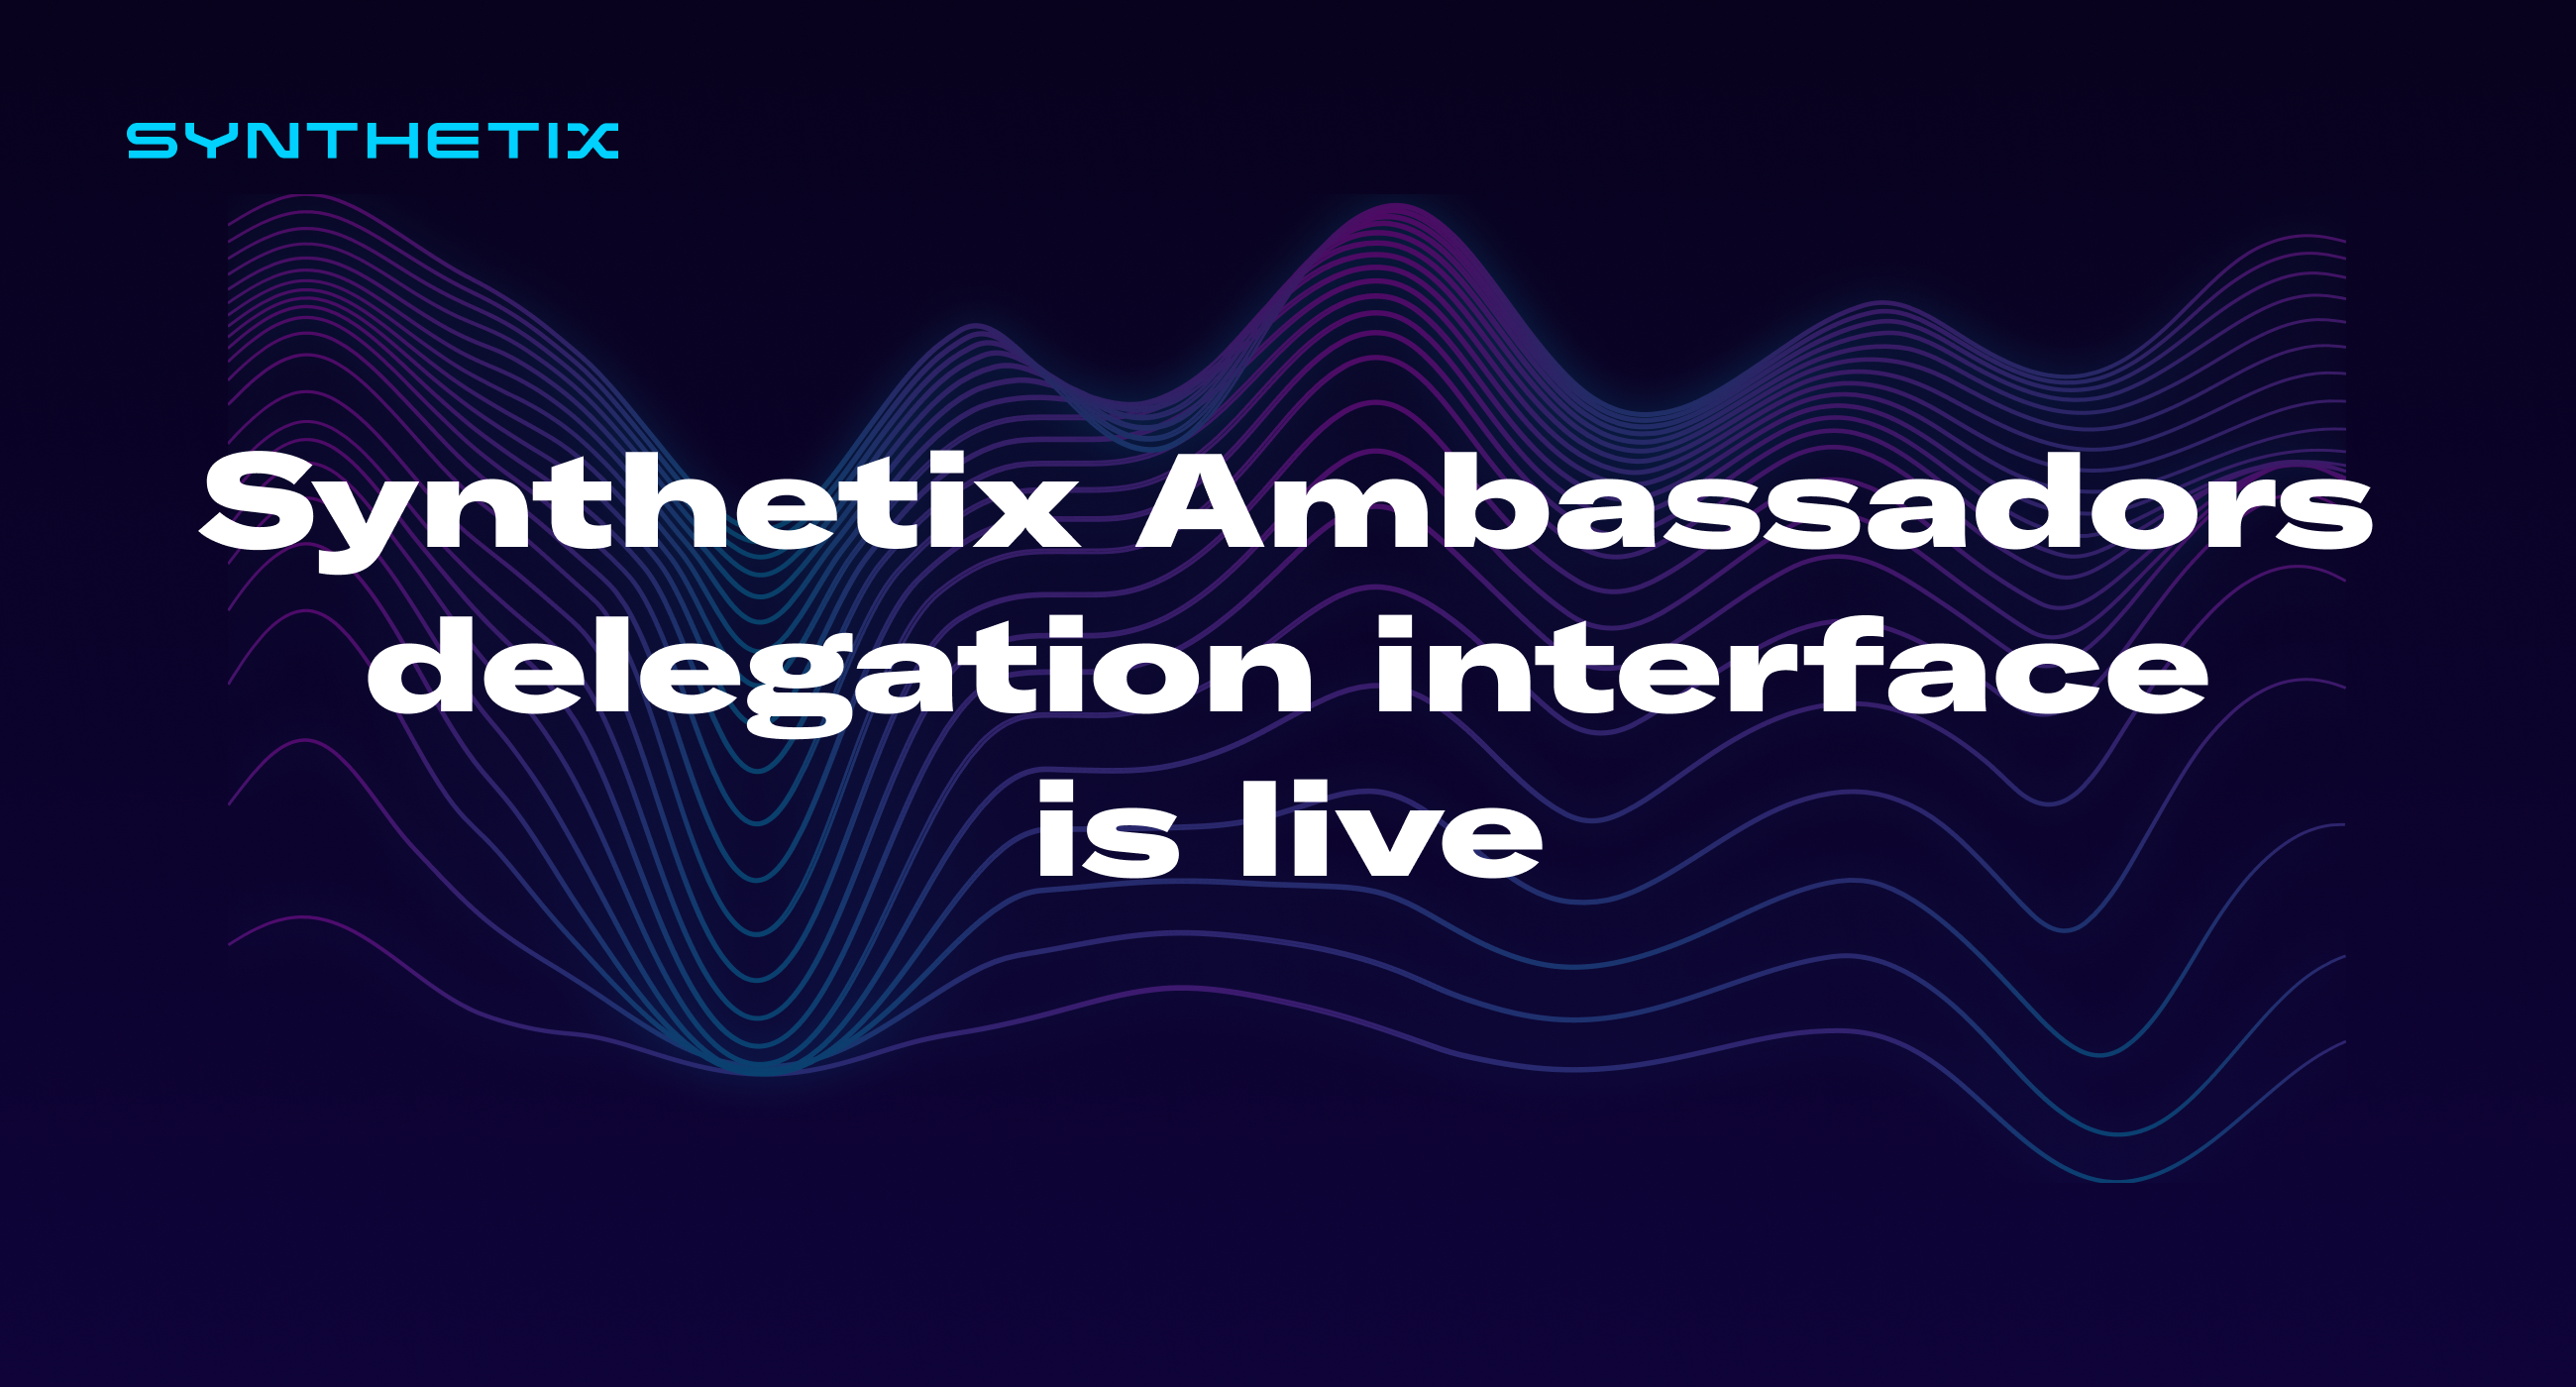 The Synthetix Ambassadors governance portal is now live!